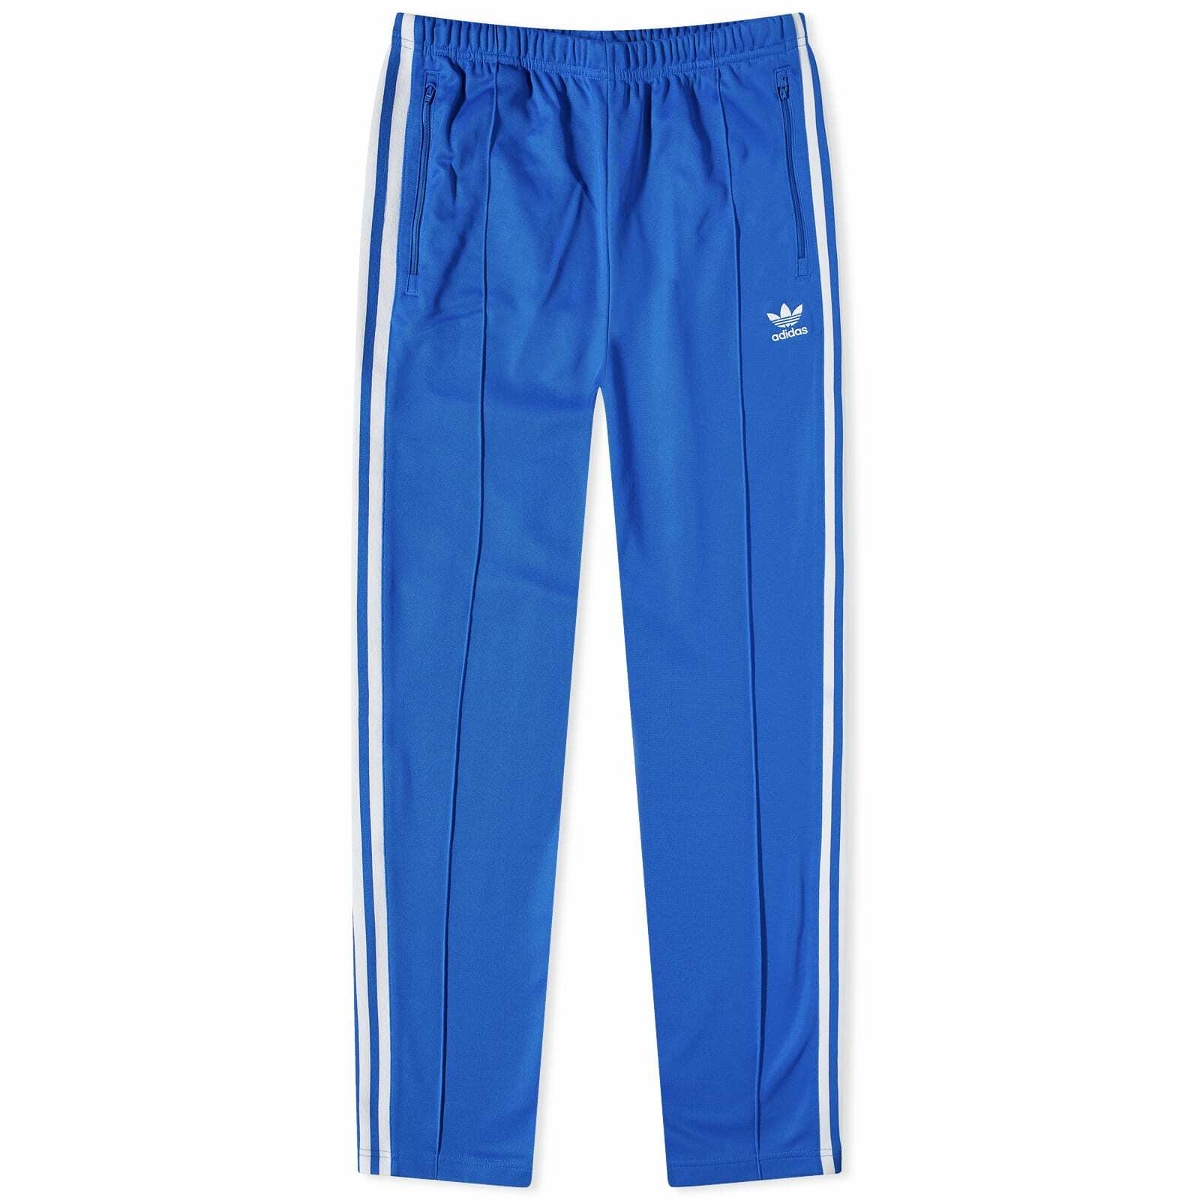 Adidas Men's Beckenbauer Track Pant in Bluebird/White adidas